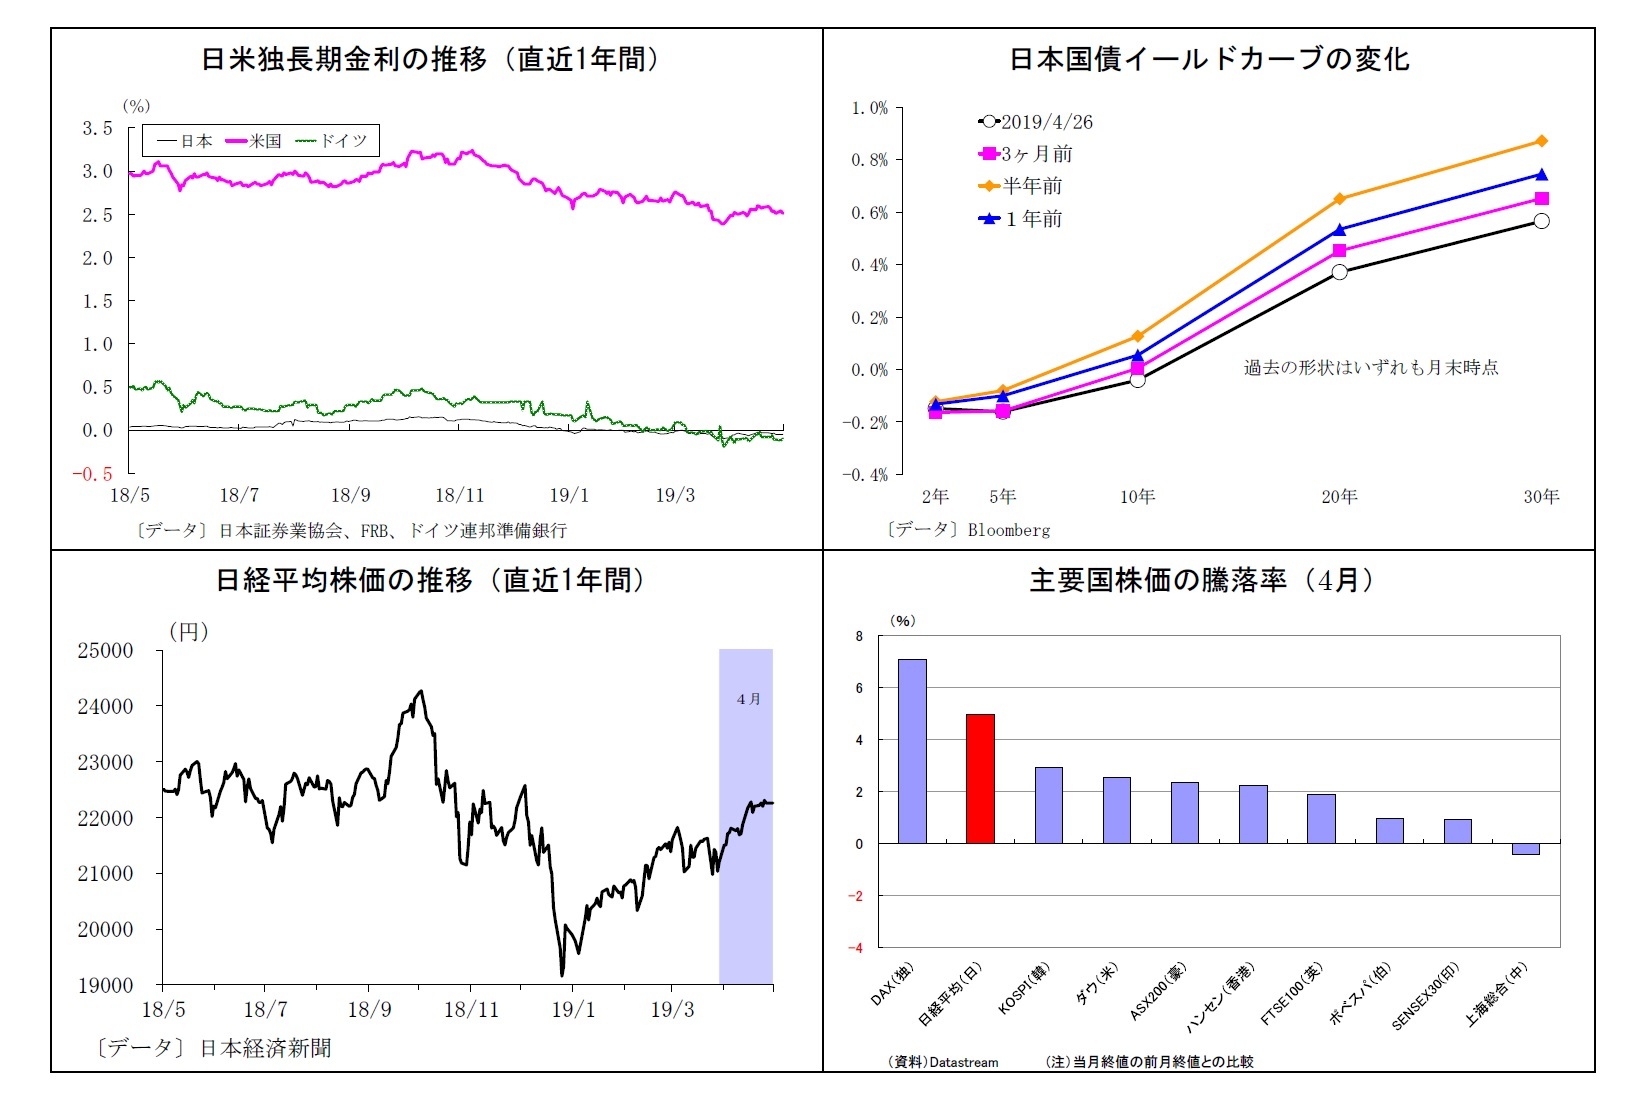 日米独長期金利の推移（直近1年間）/日本国債イールドカーブの変化/日経平均株価の推移（直近1年間）/主要国株価の騰落率（4月）